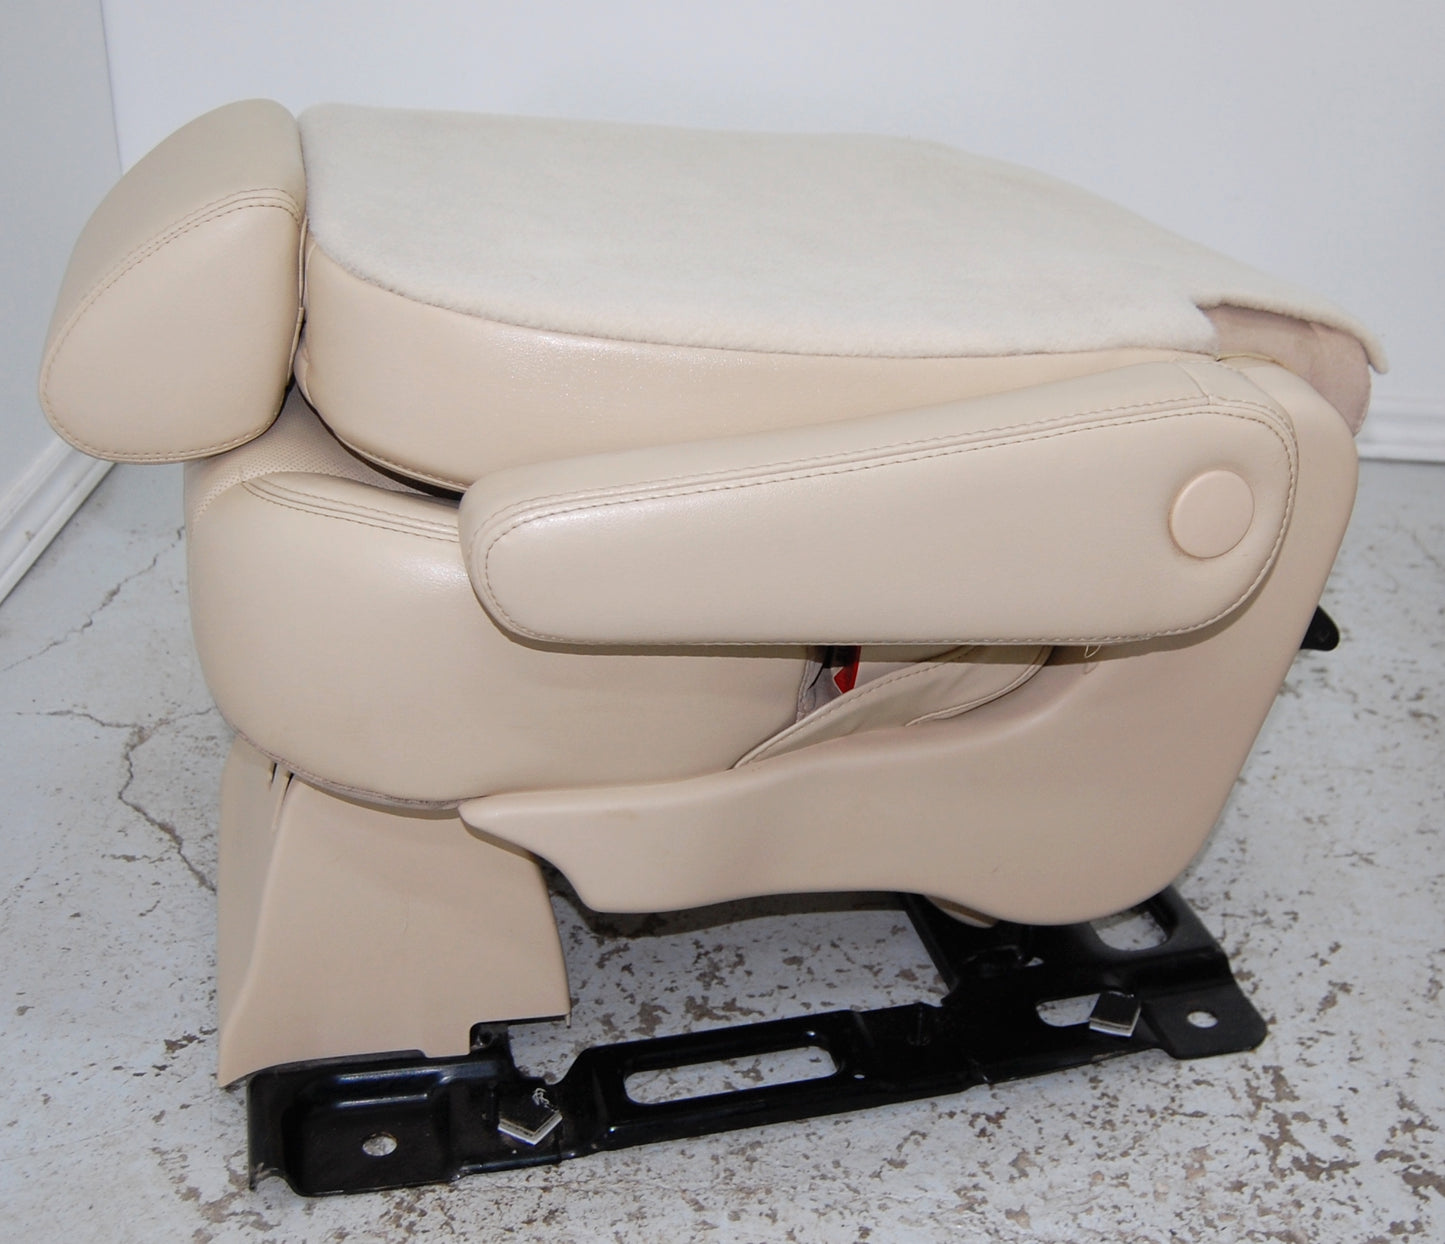 GMC Yukon XL 2007-2014 2nd Second Row Tan Leather Bucket Seats Suburban Denali Escalade ESV